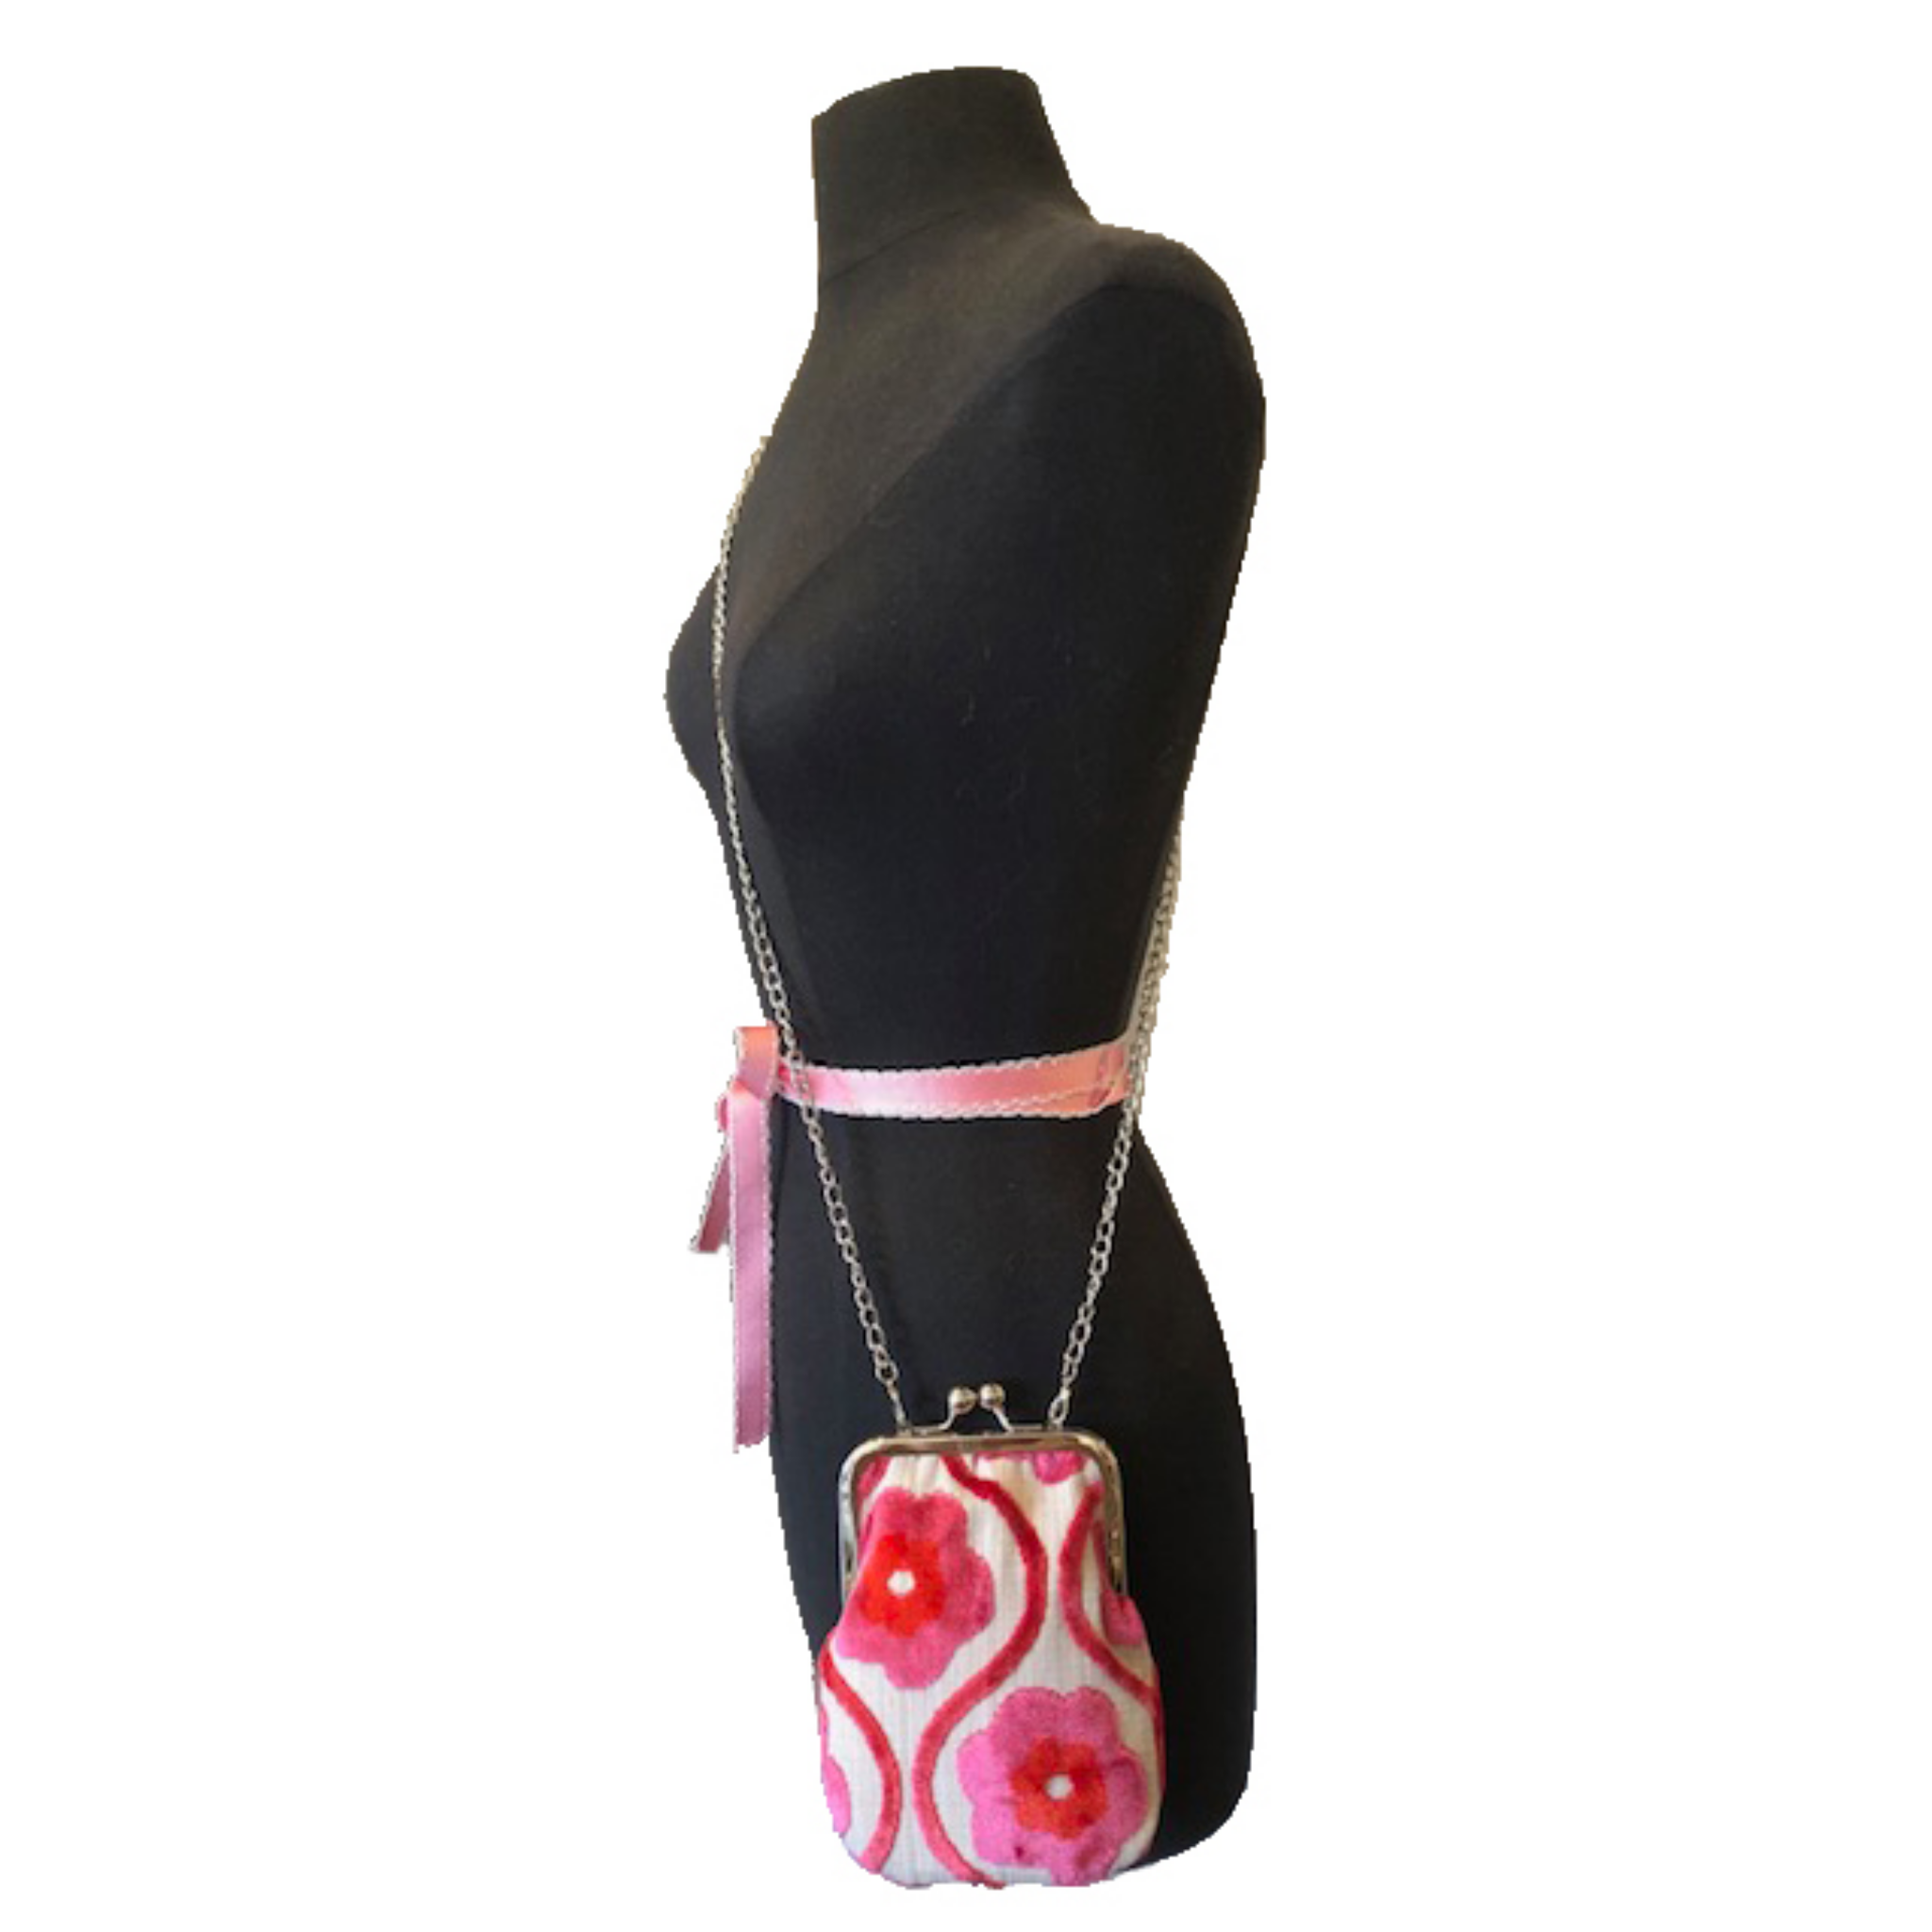 Birdie Crossbody - Coral/Pink Chenille Flower Power-Handbags-Glenda Gies-LouisGeorge Boutique, Women’s Fashion Boutique Located in Trussville, Alabama